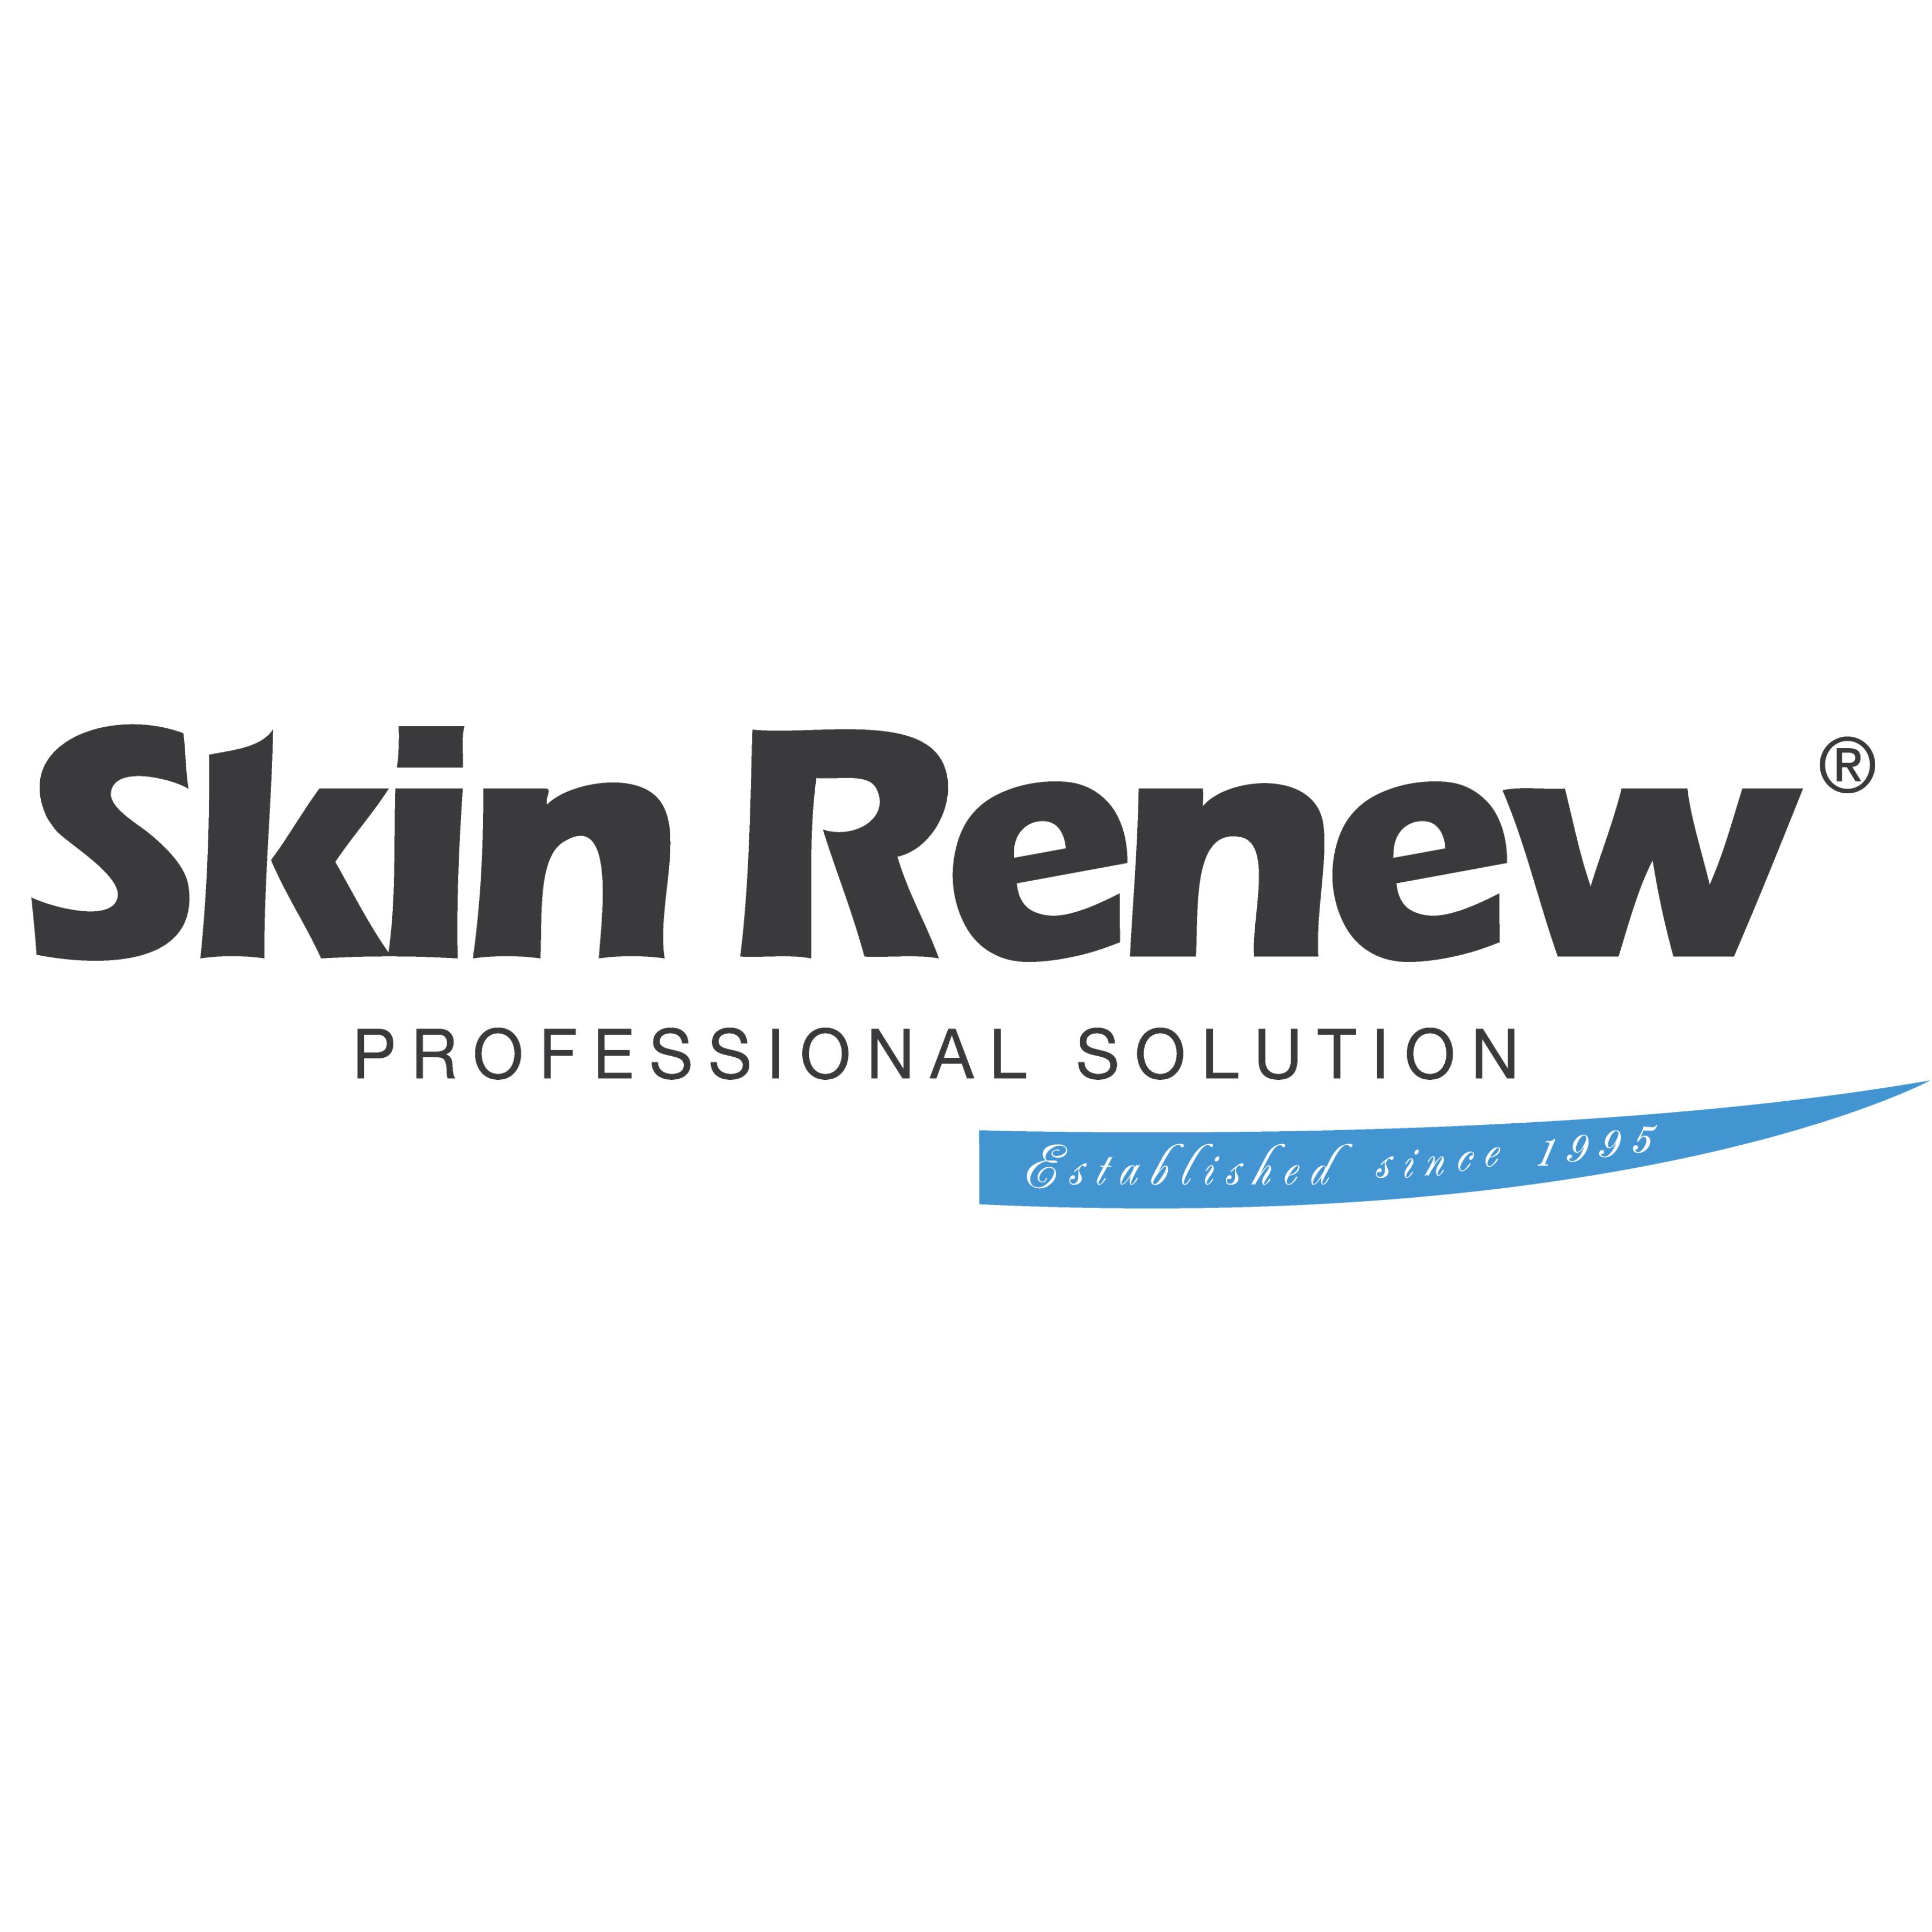 Skin Renew Professional Solution Sdn Bhd